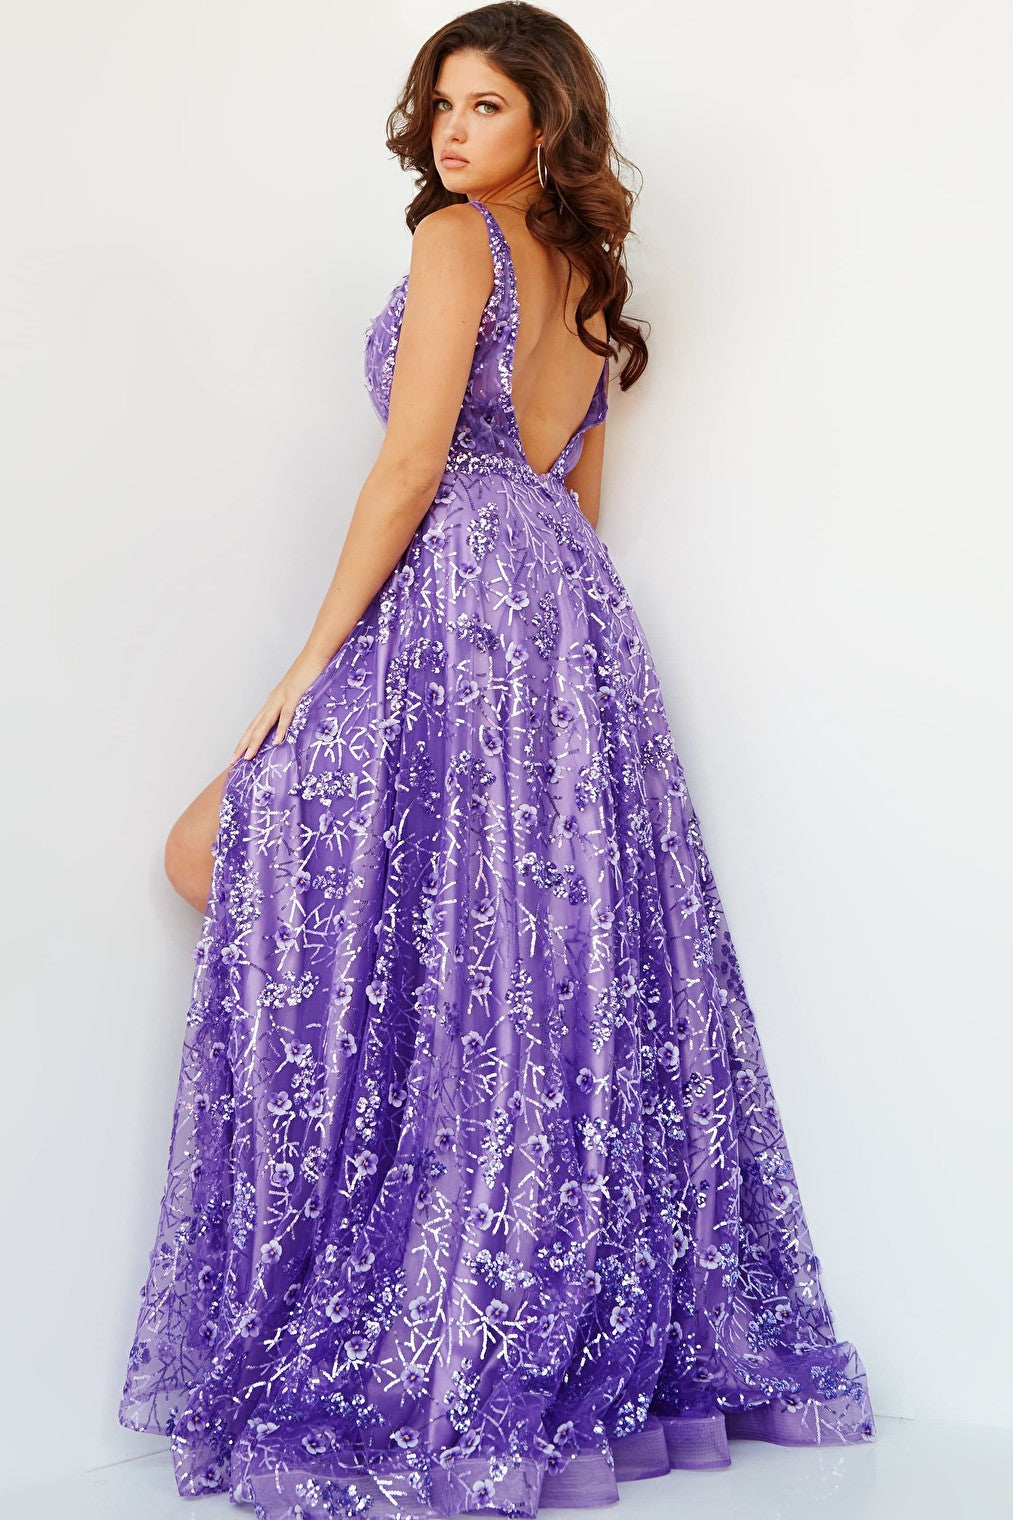 backless purple dress 08422